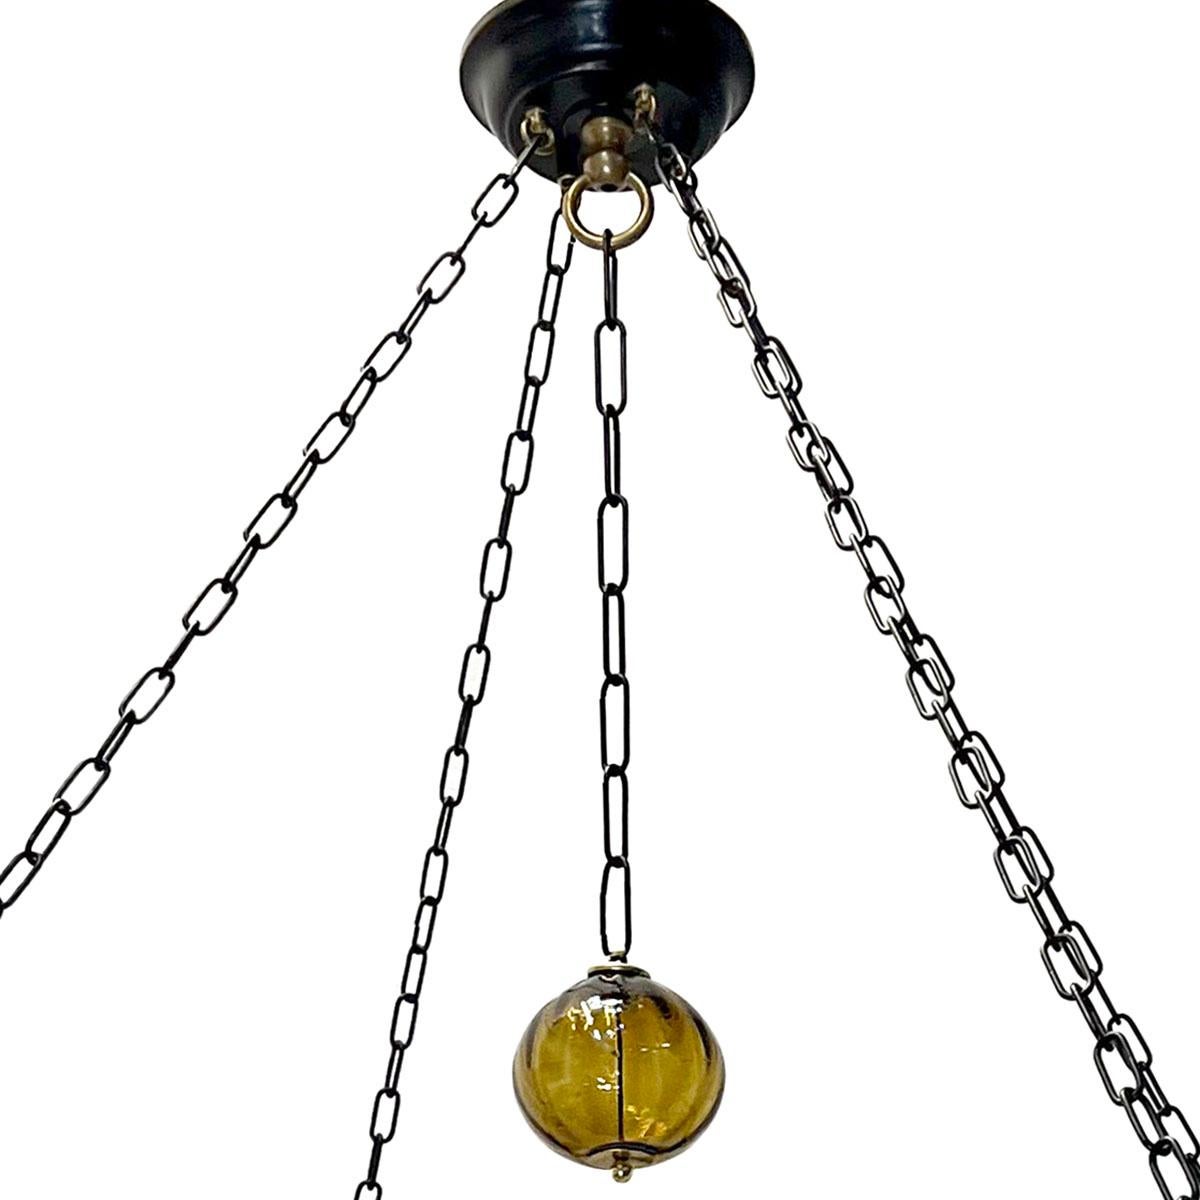 A circa 1950's Swedish eighteen-light wrought iron chandelier with blown amber glass pendants.

Measurements:
Diameter: 48